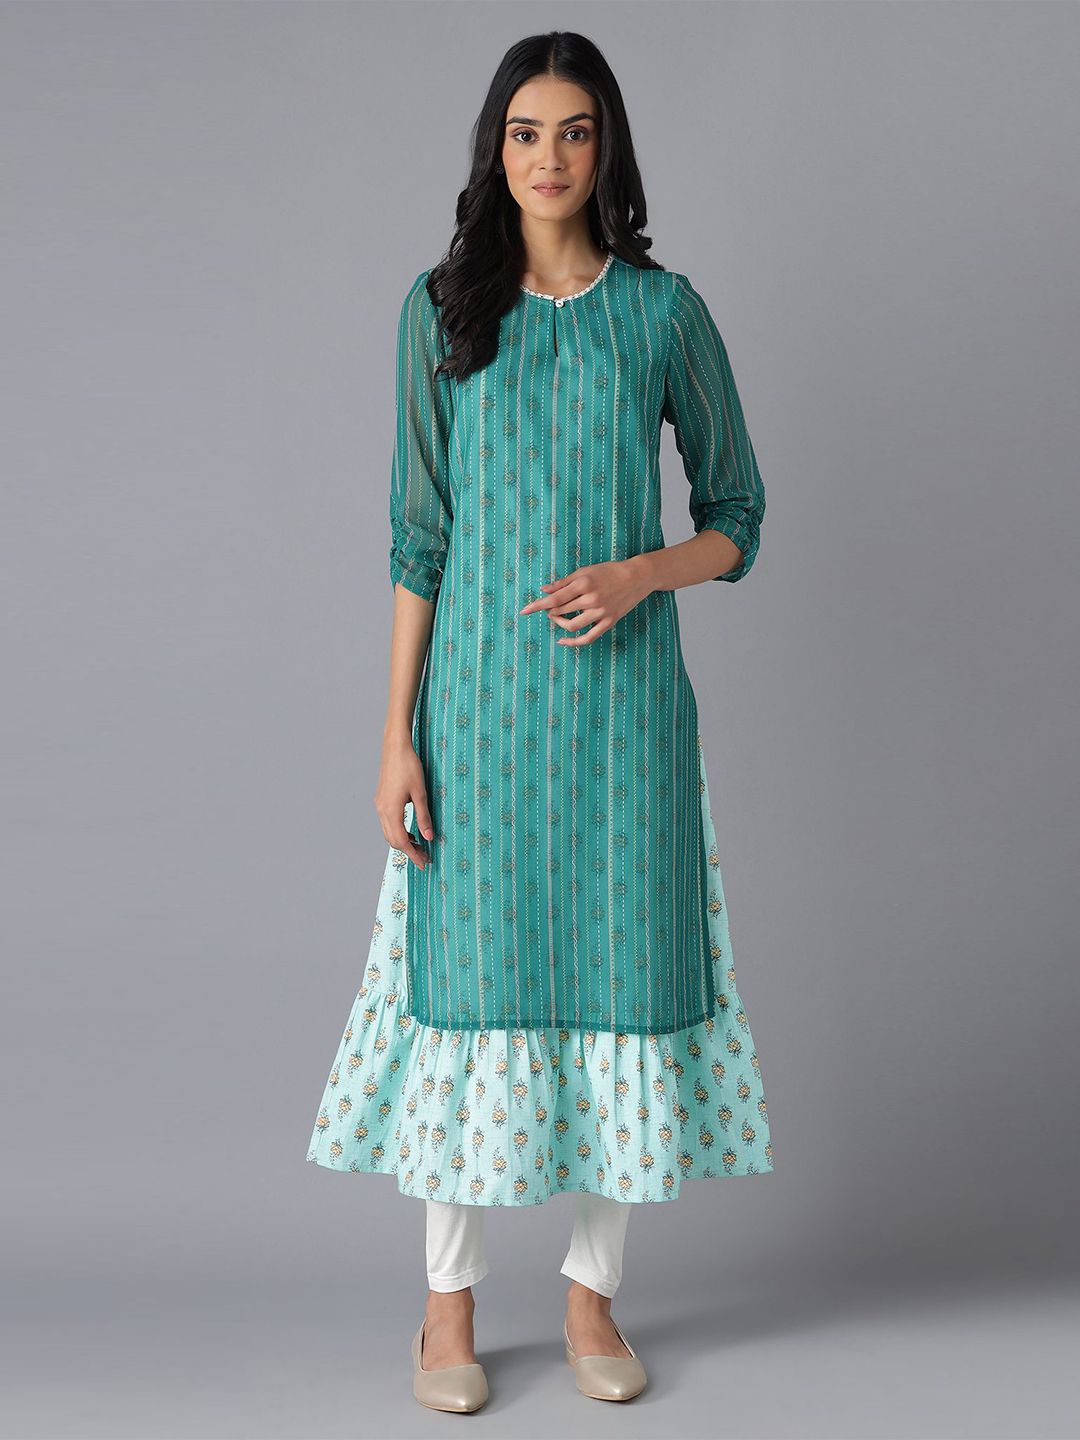 AURELIA Green & meadowbrook Ethnic Motifs A-Line Midi Dress Price in India